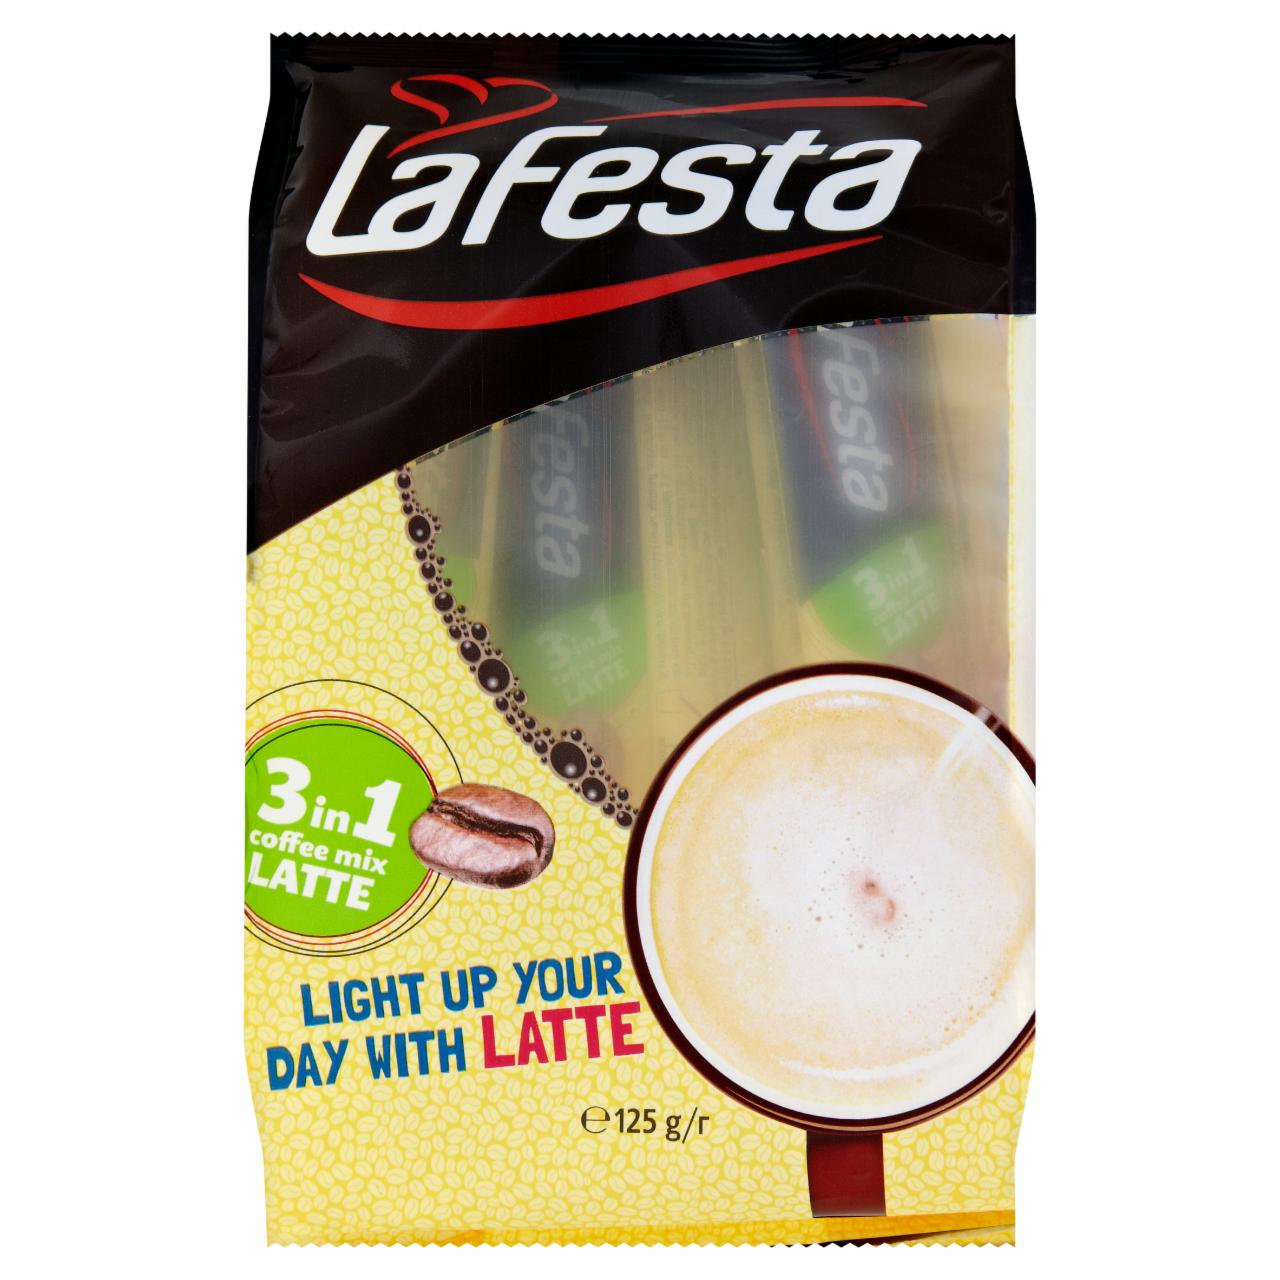 Képek - La Festa 3 in 1 latte azonnal oldódó italpor 10 db 125 g